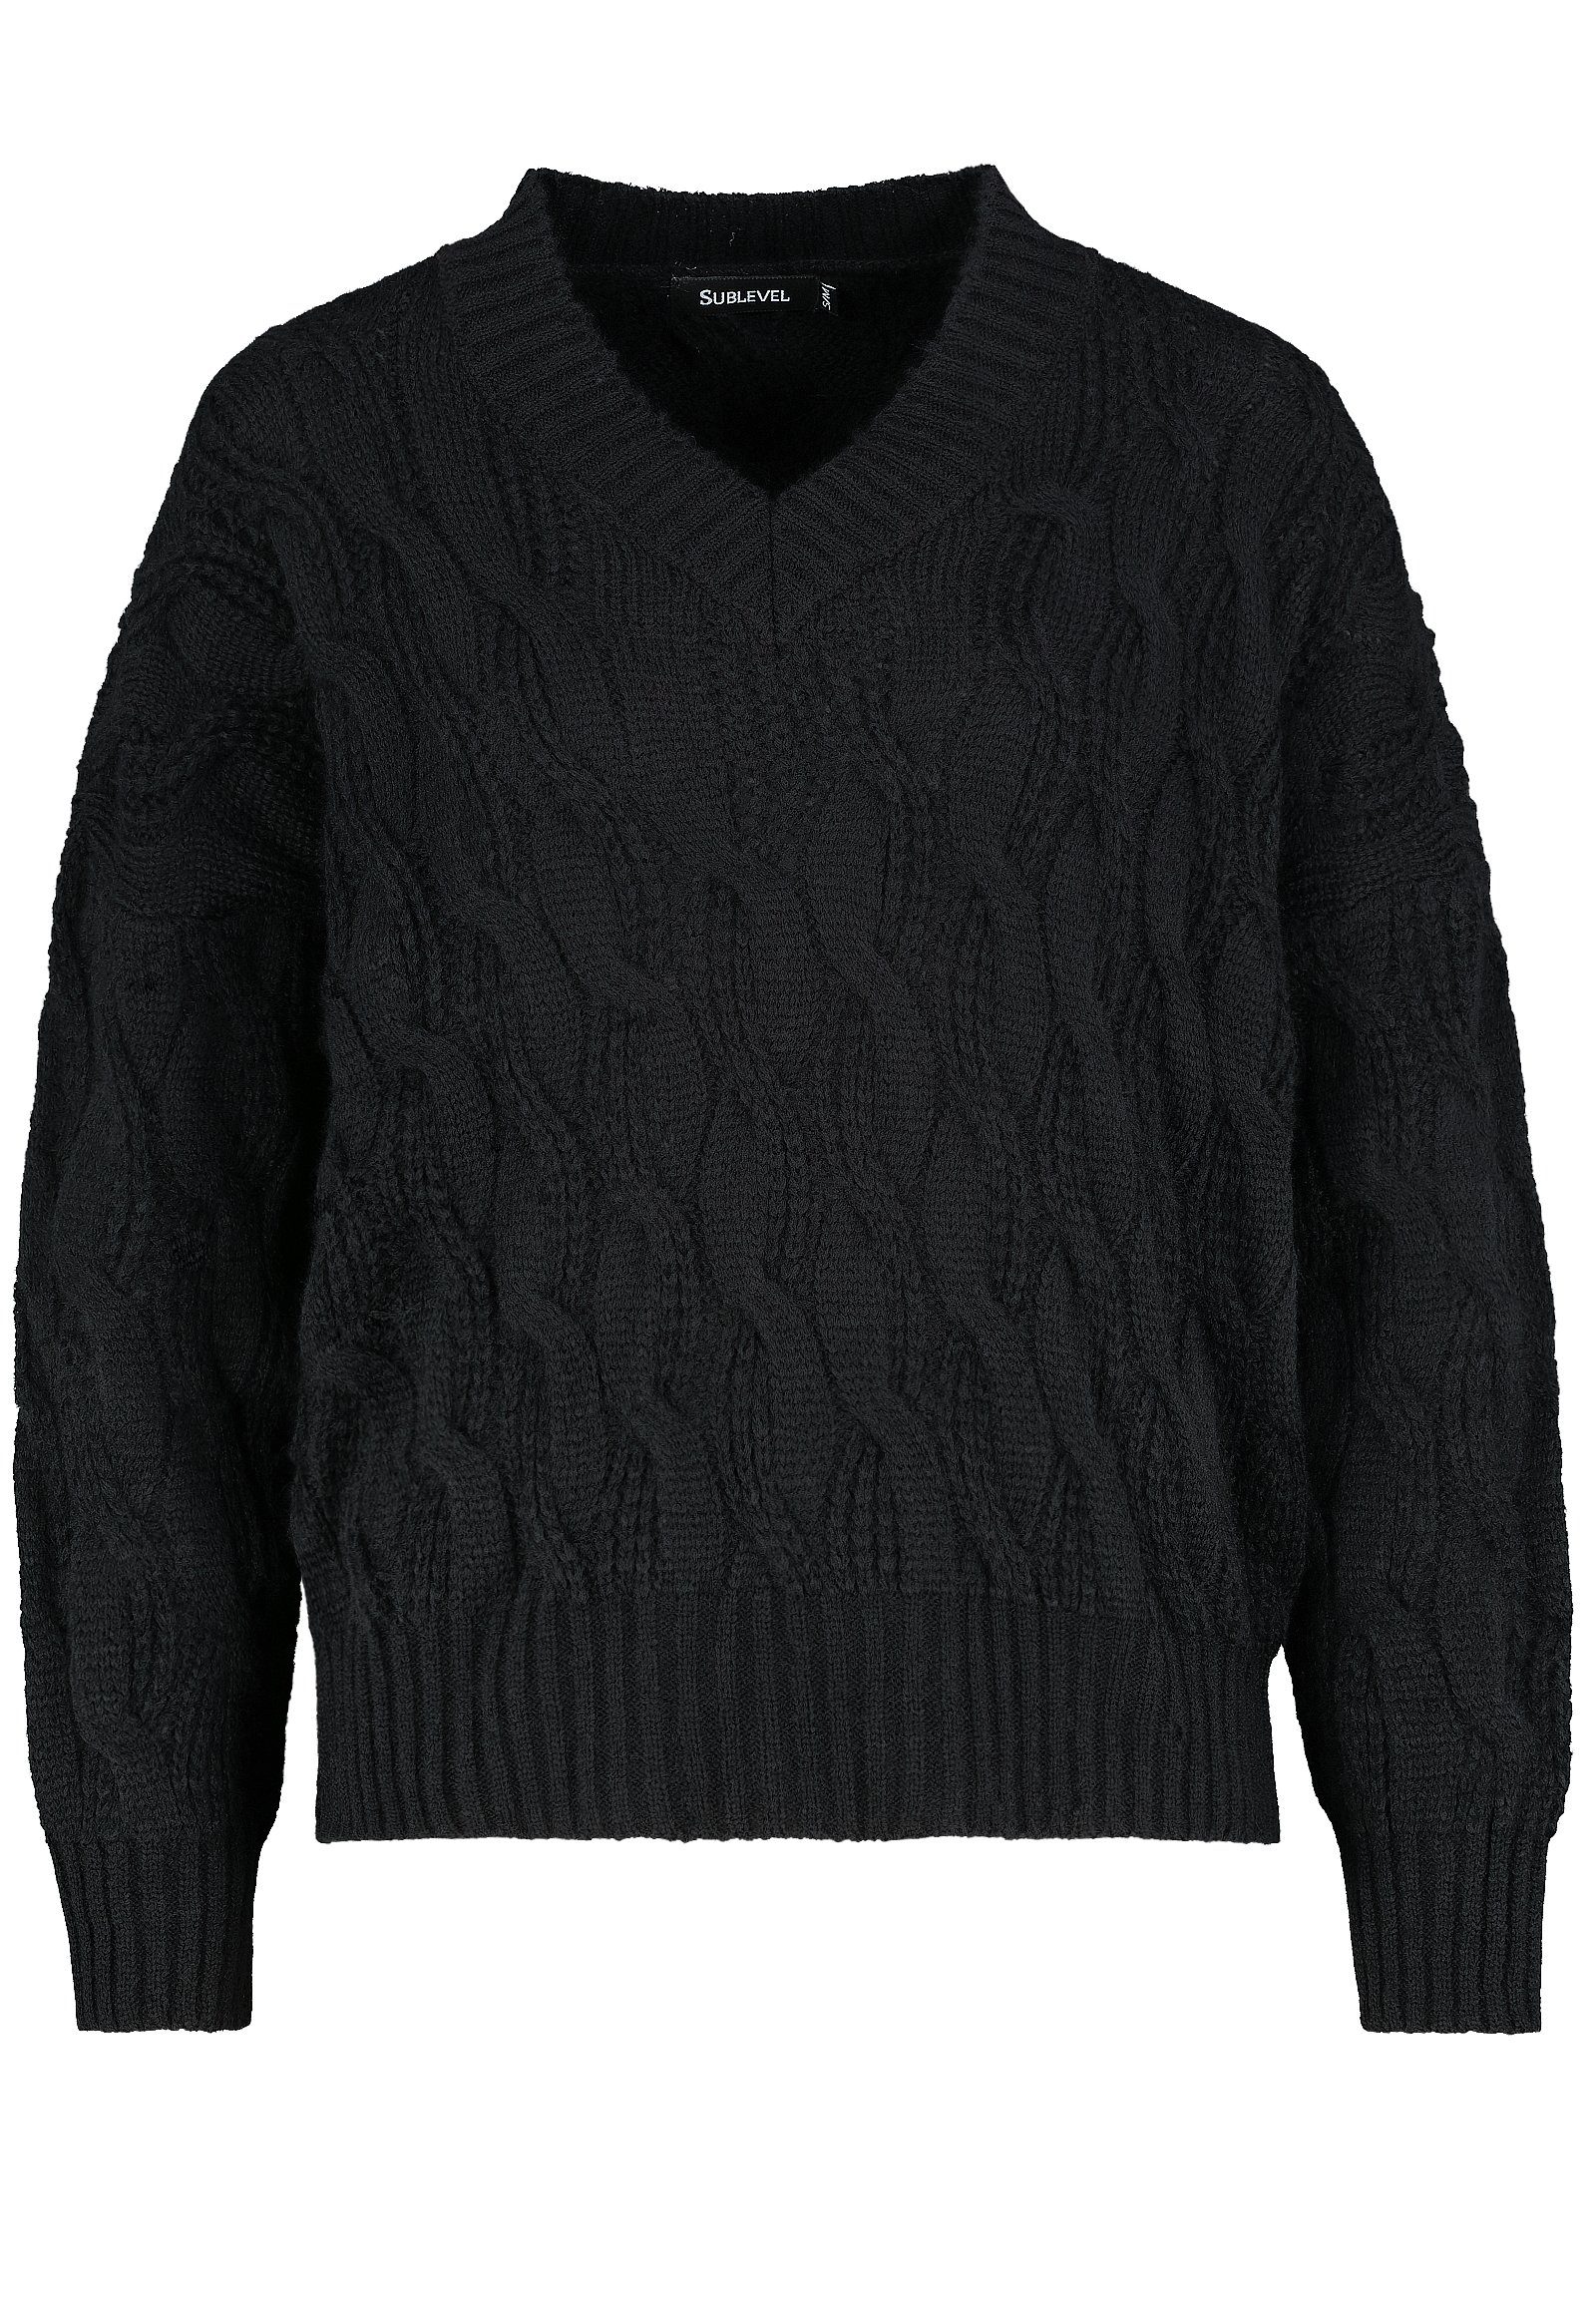 SUBLEVEL Strickpullover Pullover mit Strickmuster black